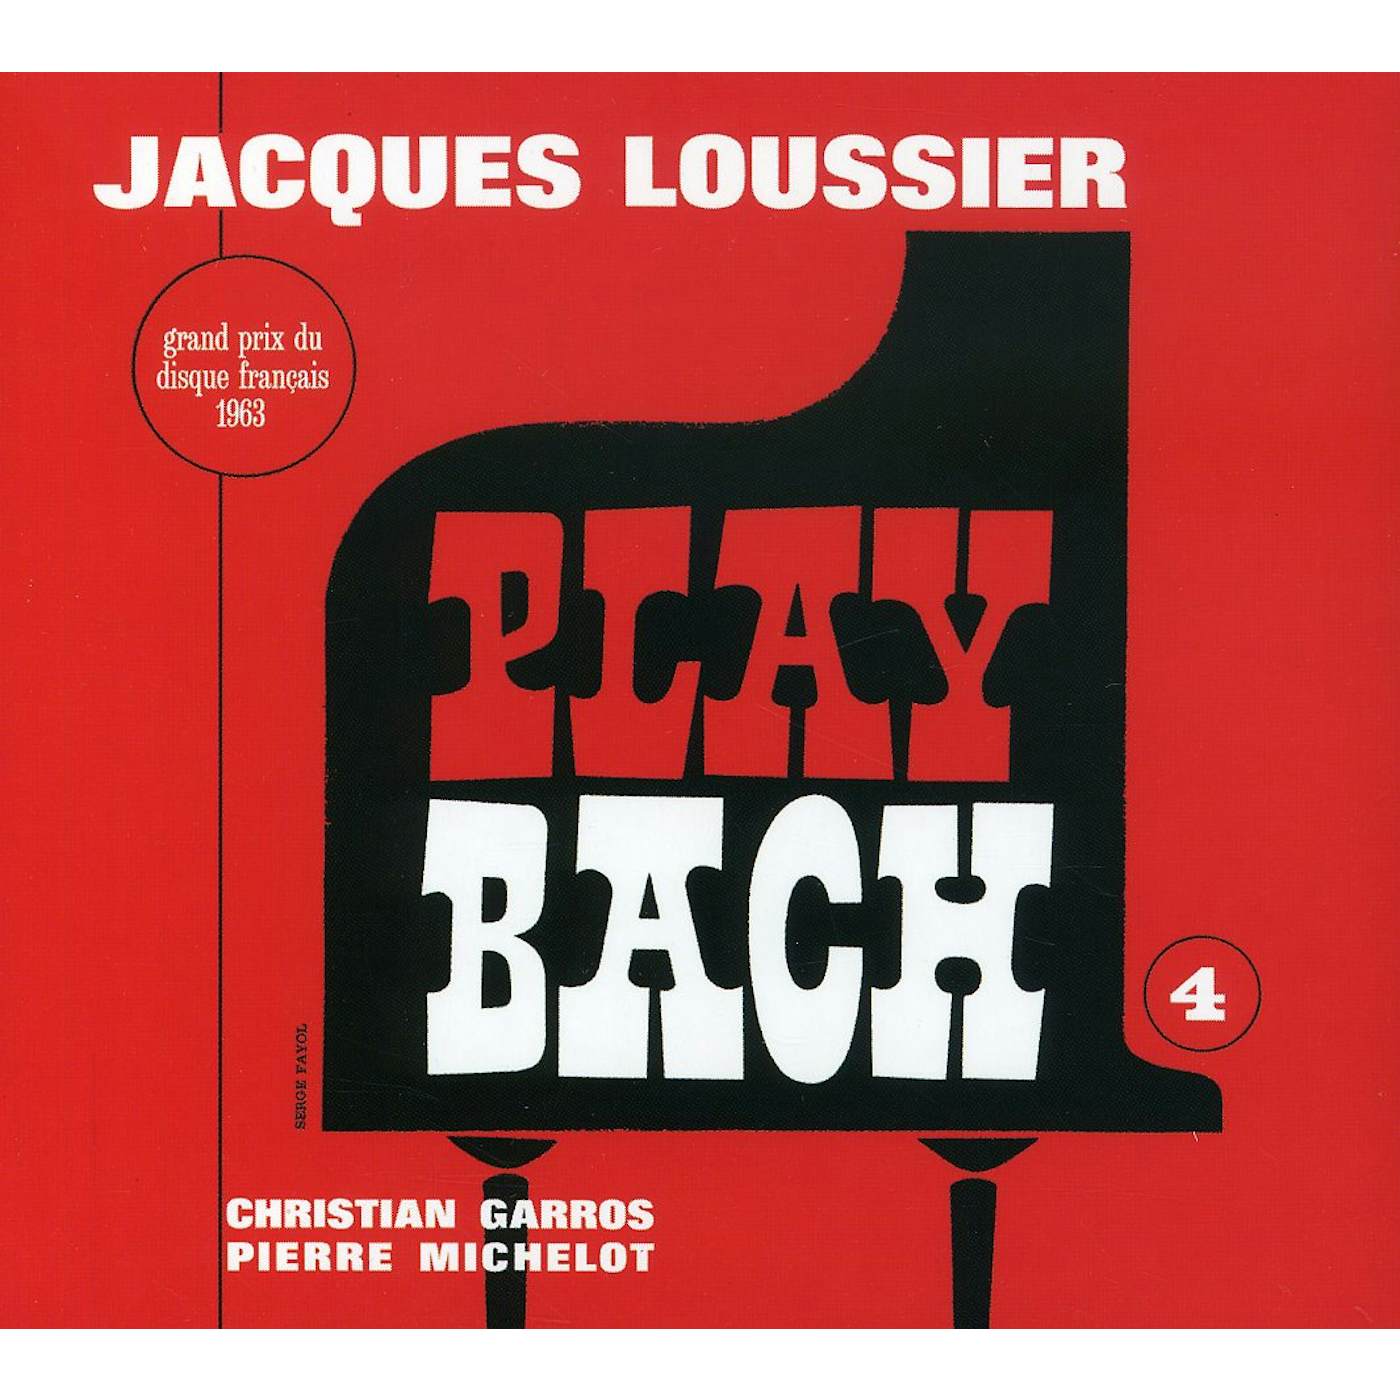 Jacques Loussier PLAY BACH N 4 CD